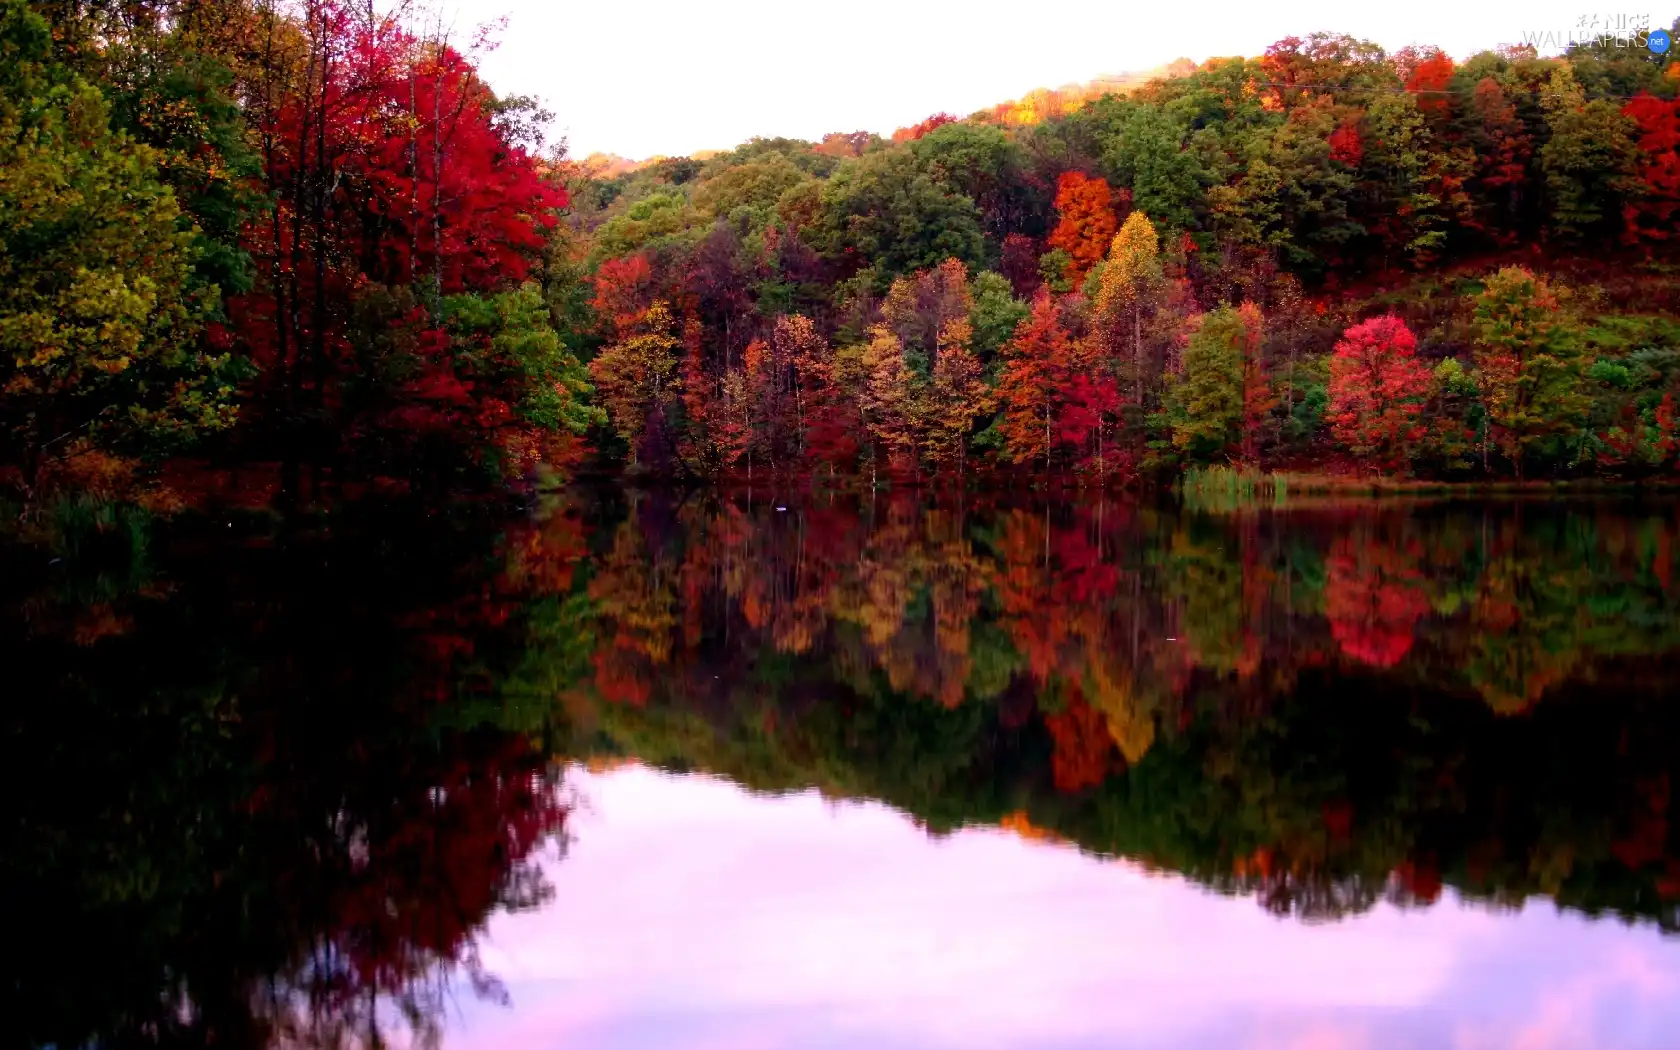 River, autumn, forest